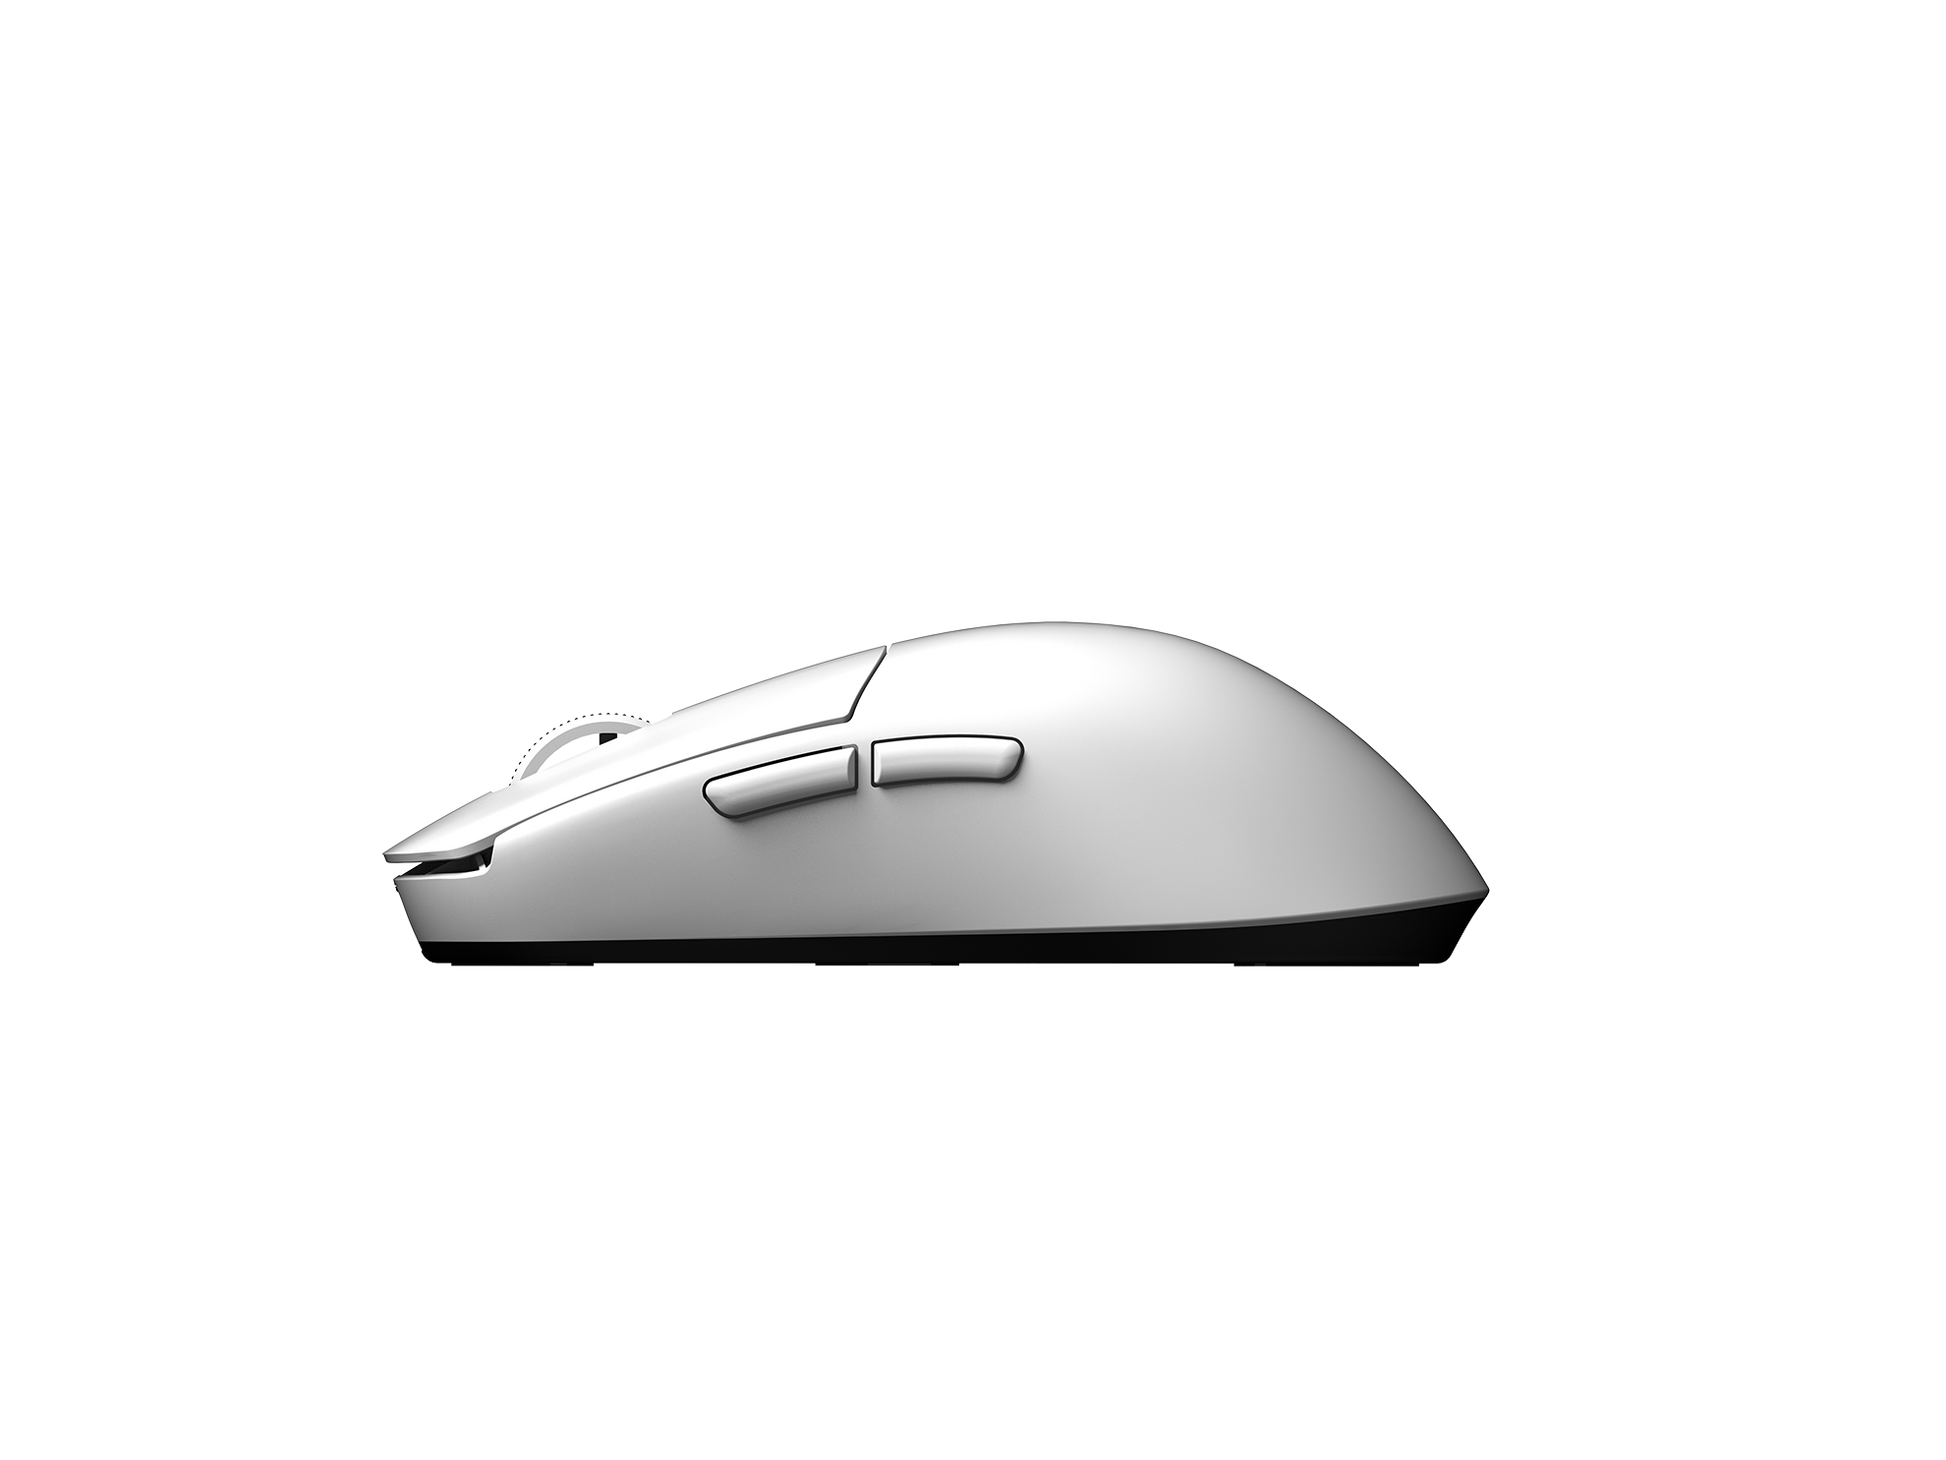 Ninjutso Sora Wireless Professional Gaming Mouse